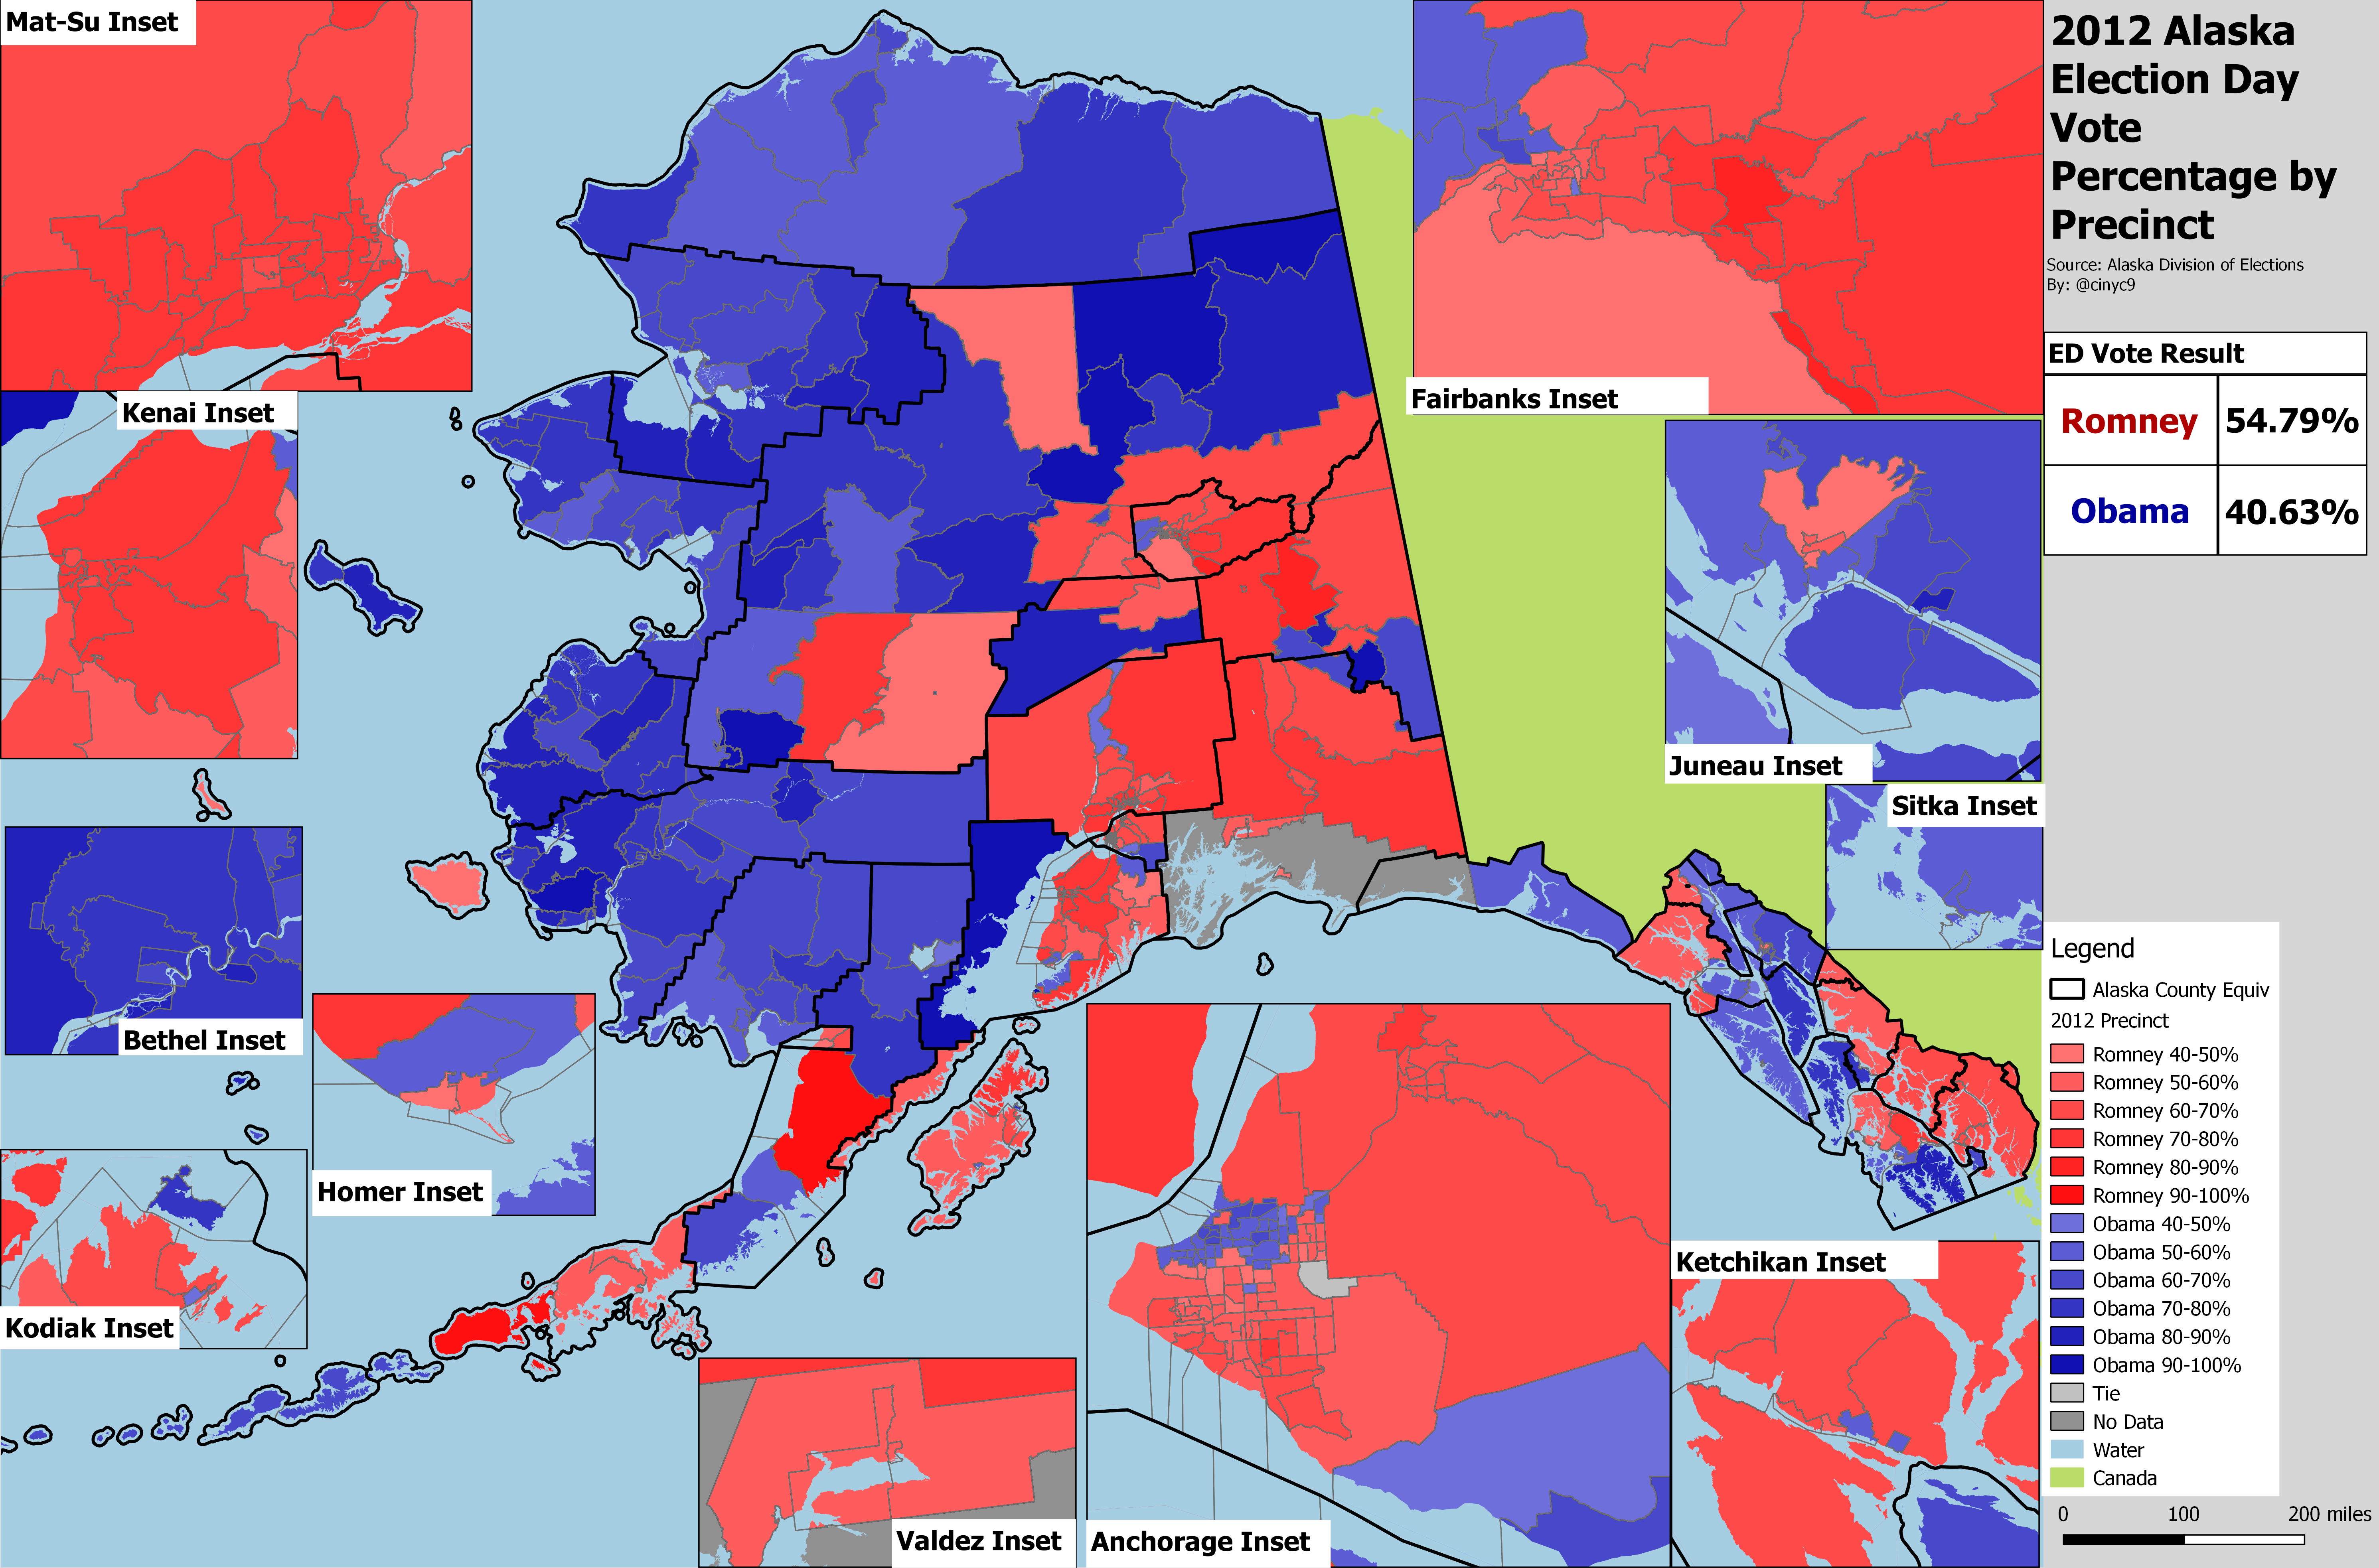 Alaska 2012 Election Day Precinct Winner Map